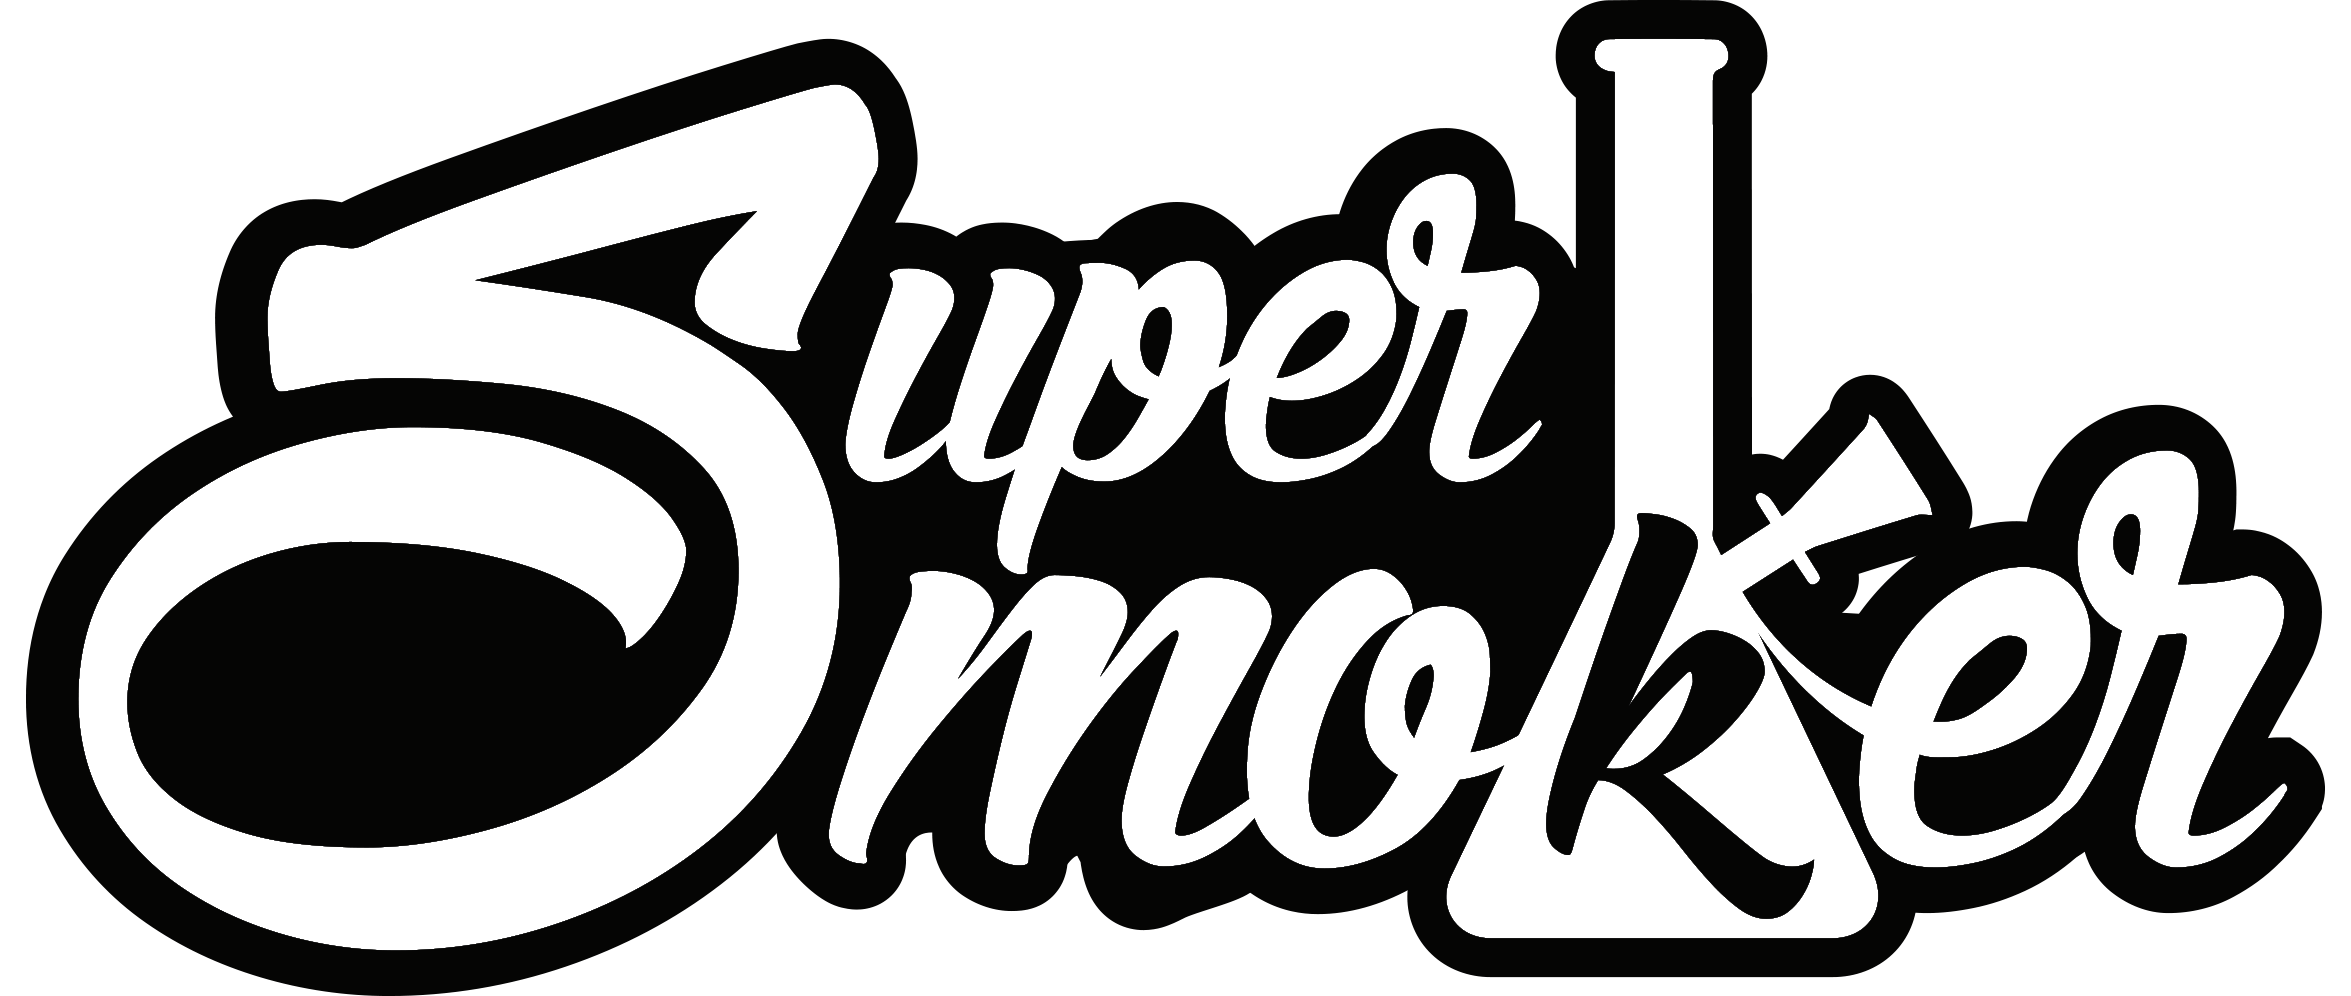 SUPER SMOKER